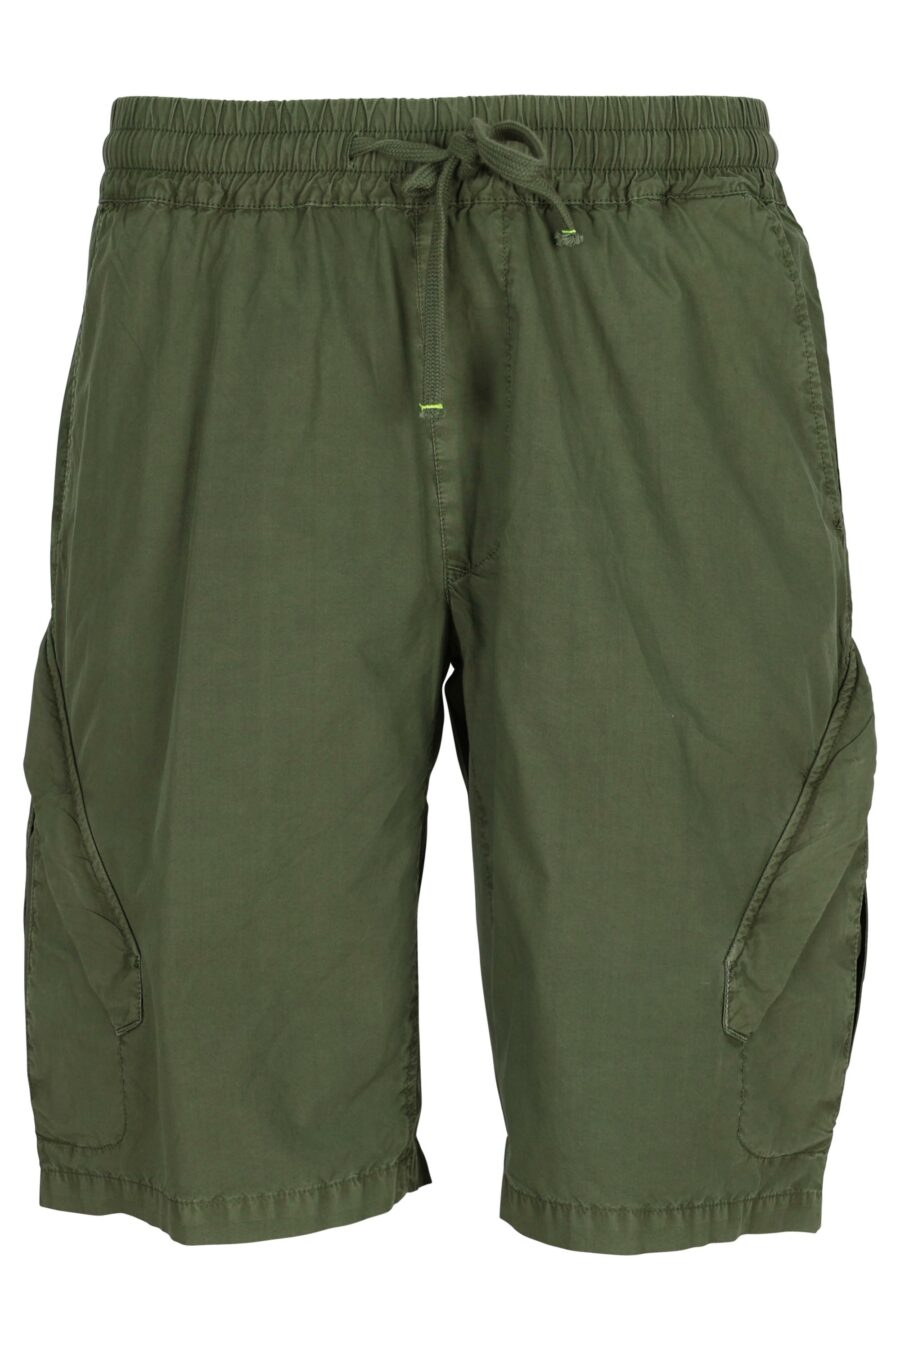 Pantalón verde militar corto con resorte - 8058610775407